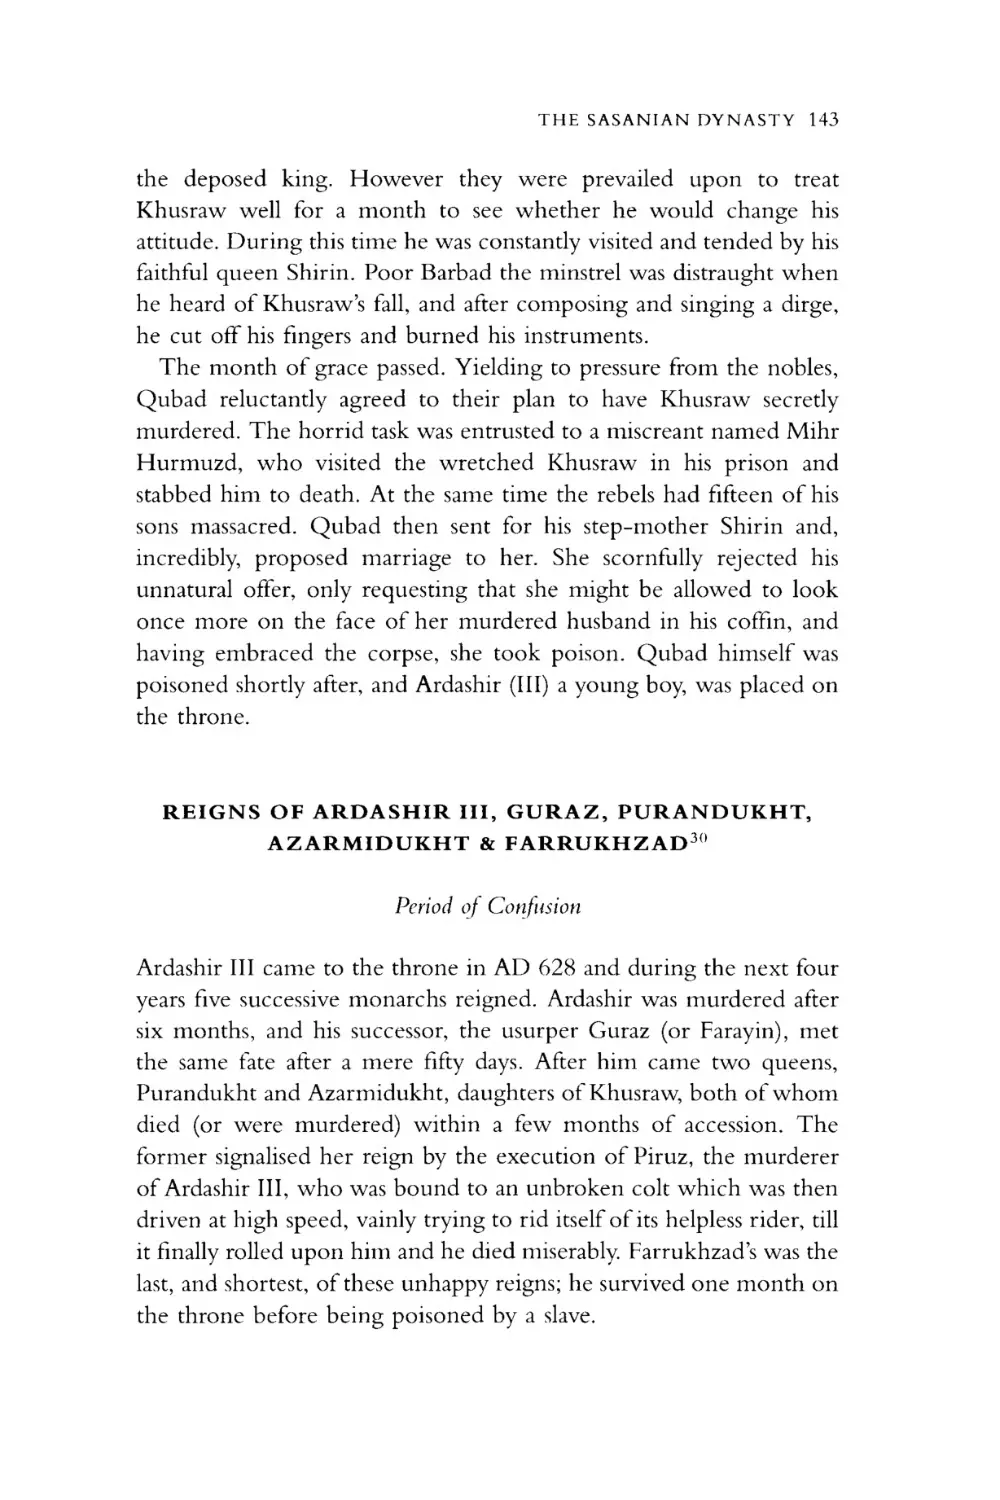 REIGNS OF ARDASHIR III, GURAZ, PURANDUKHT, AZARMIDUKHT & FARRUKHZAD
Period of Confusion